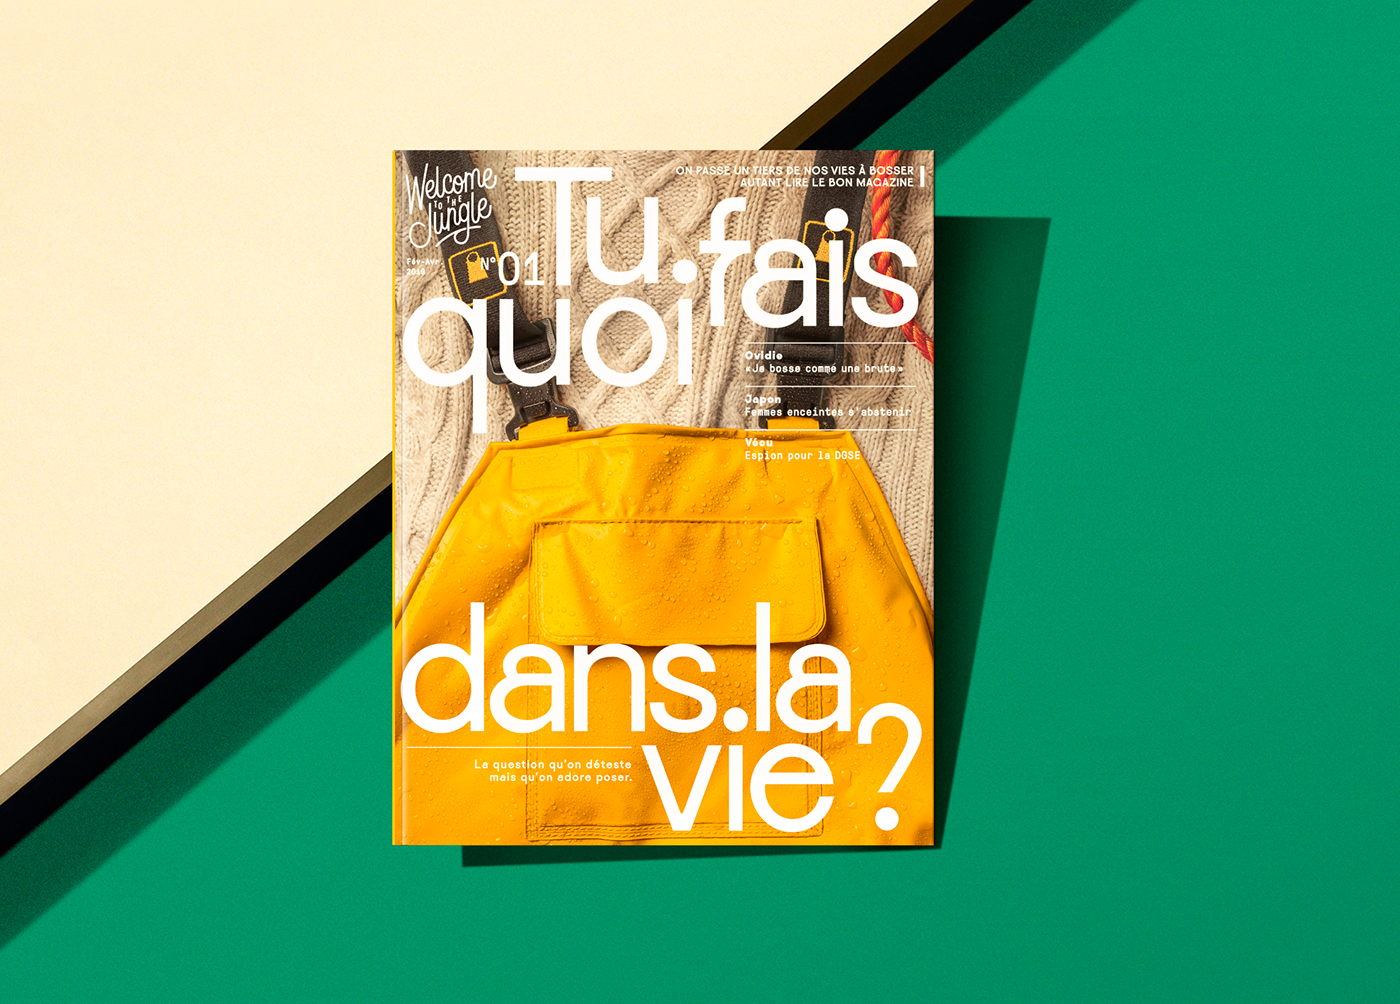 welcometothejungle type font Violaine&jeremy yellow custom type editorial design  Paul Rousteau Aysha Tengiz colour